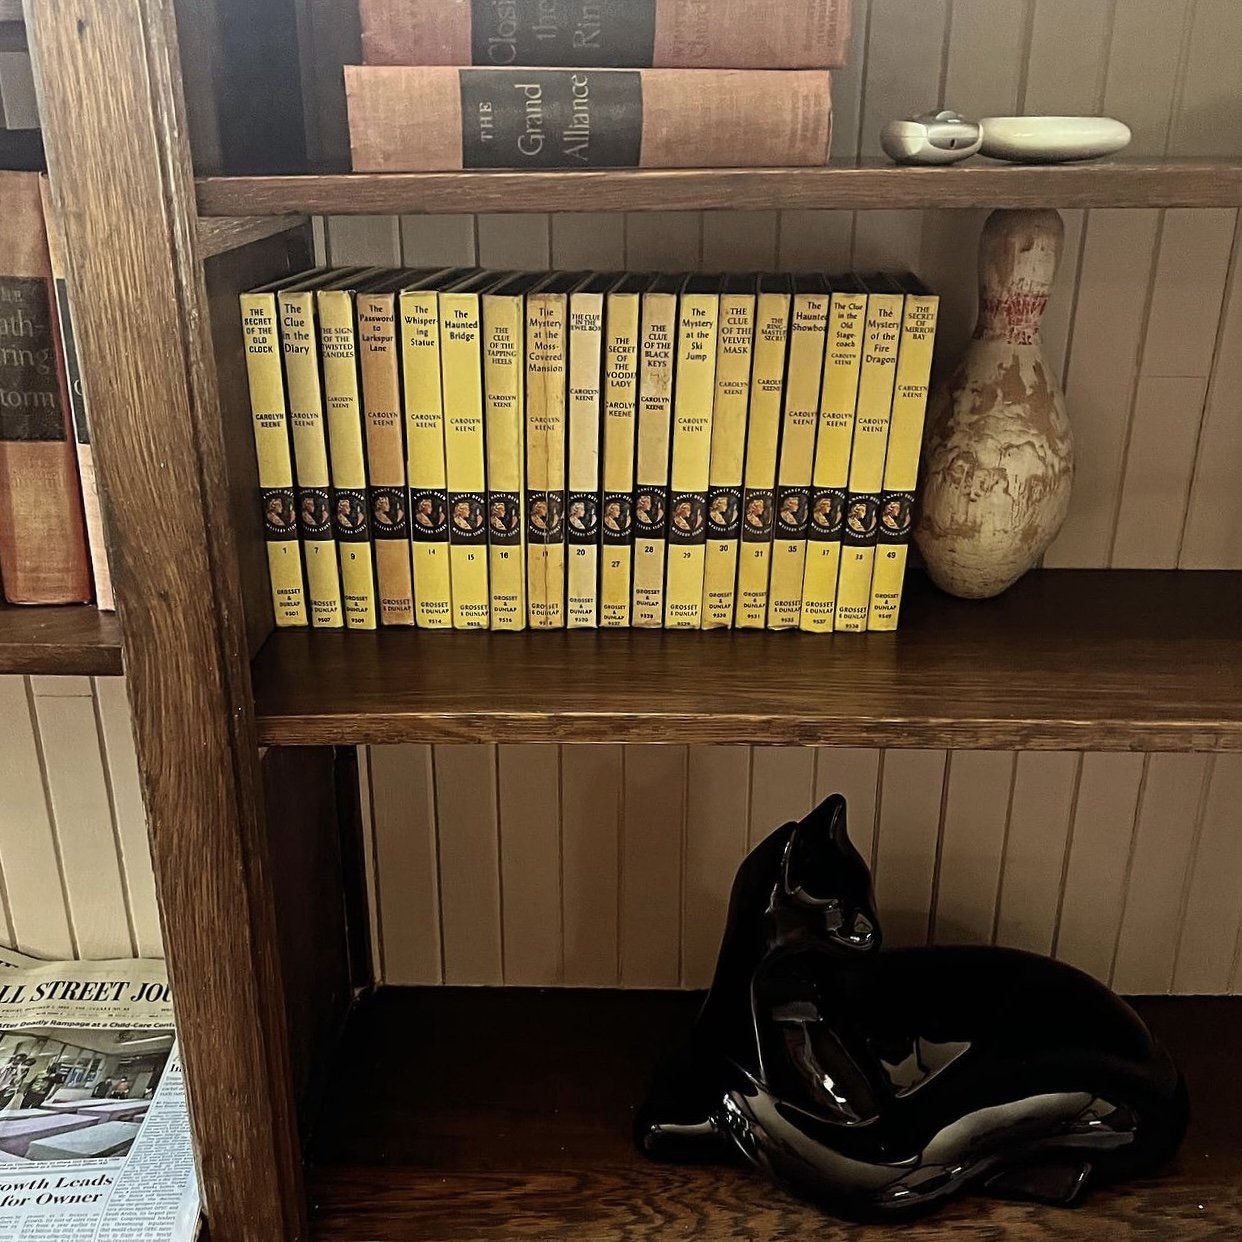 bookshelf-display-vintage-books-haegar-black-cat-bowling-pin.jpg